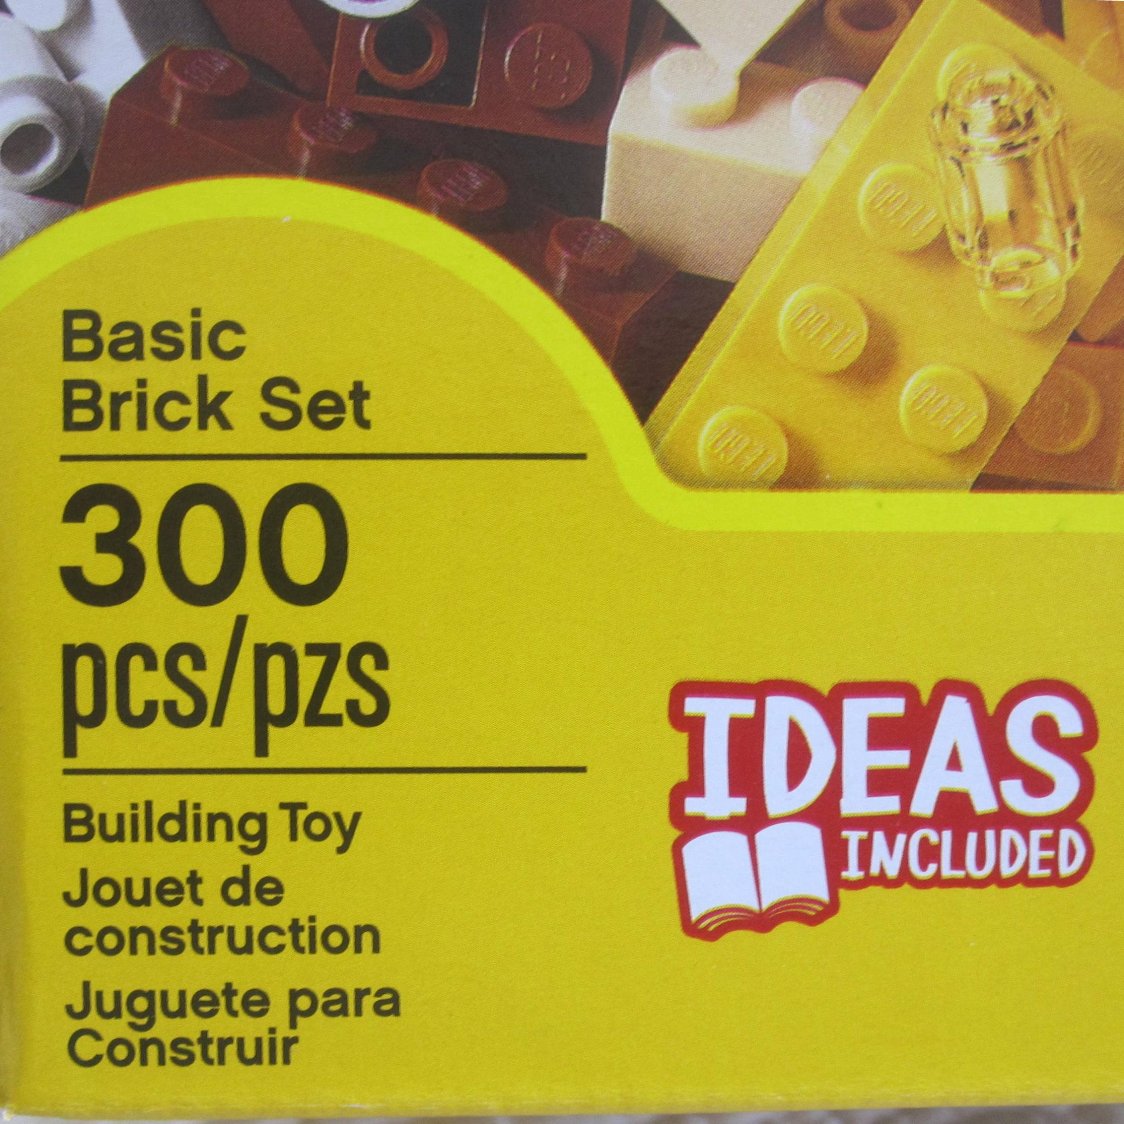 Basic Brick Set